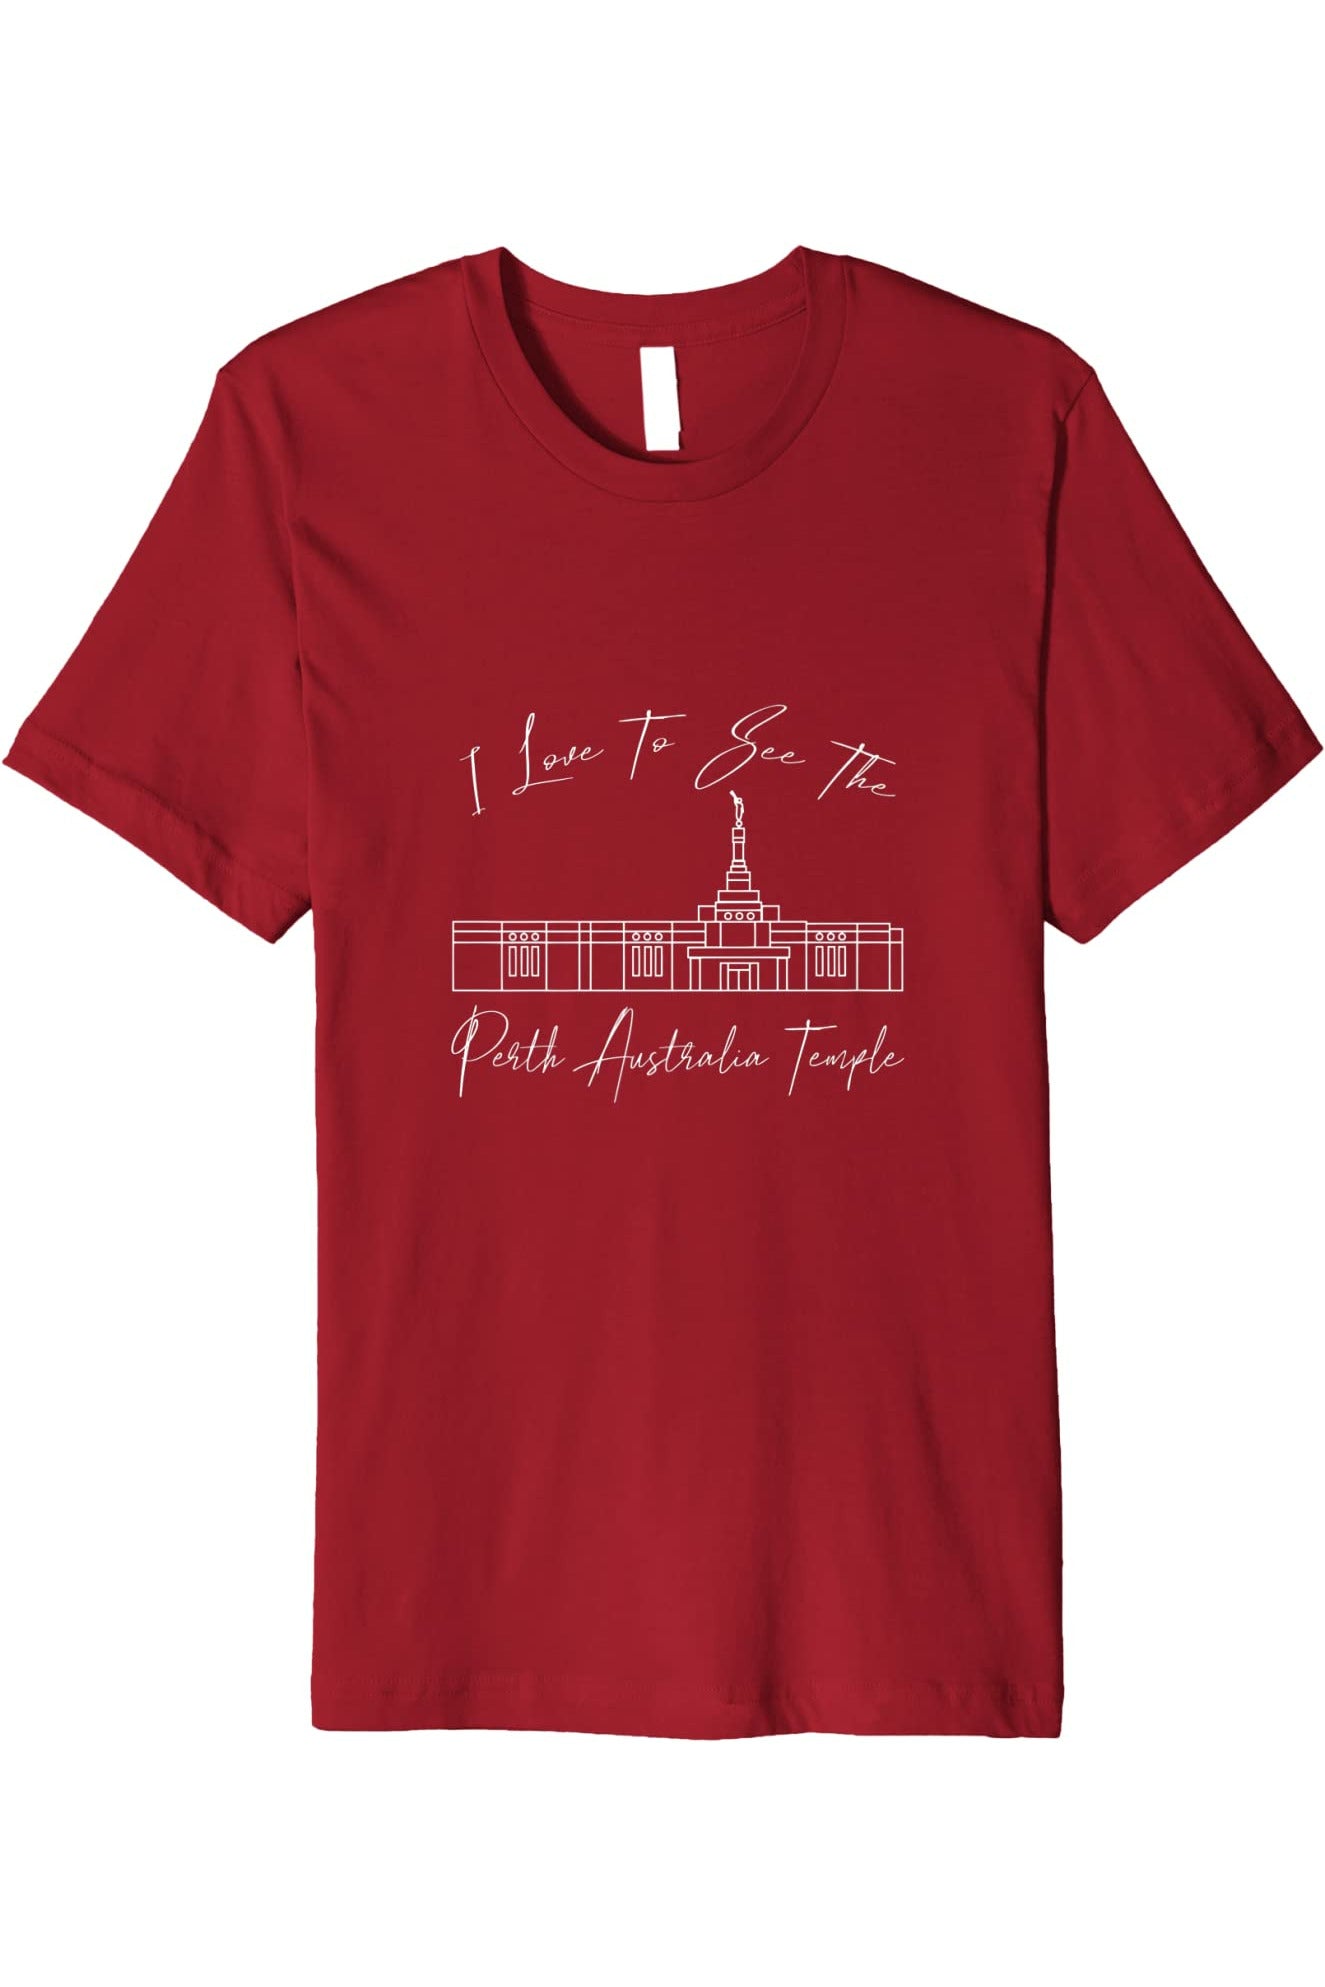 Perth Australia Temple T-Shirt - Premium - Calligraphy Style (English) US